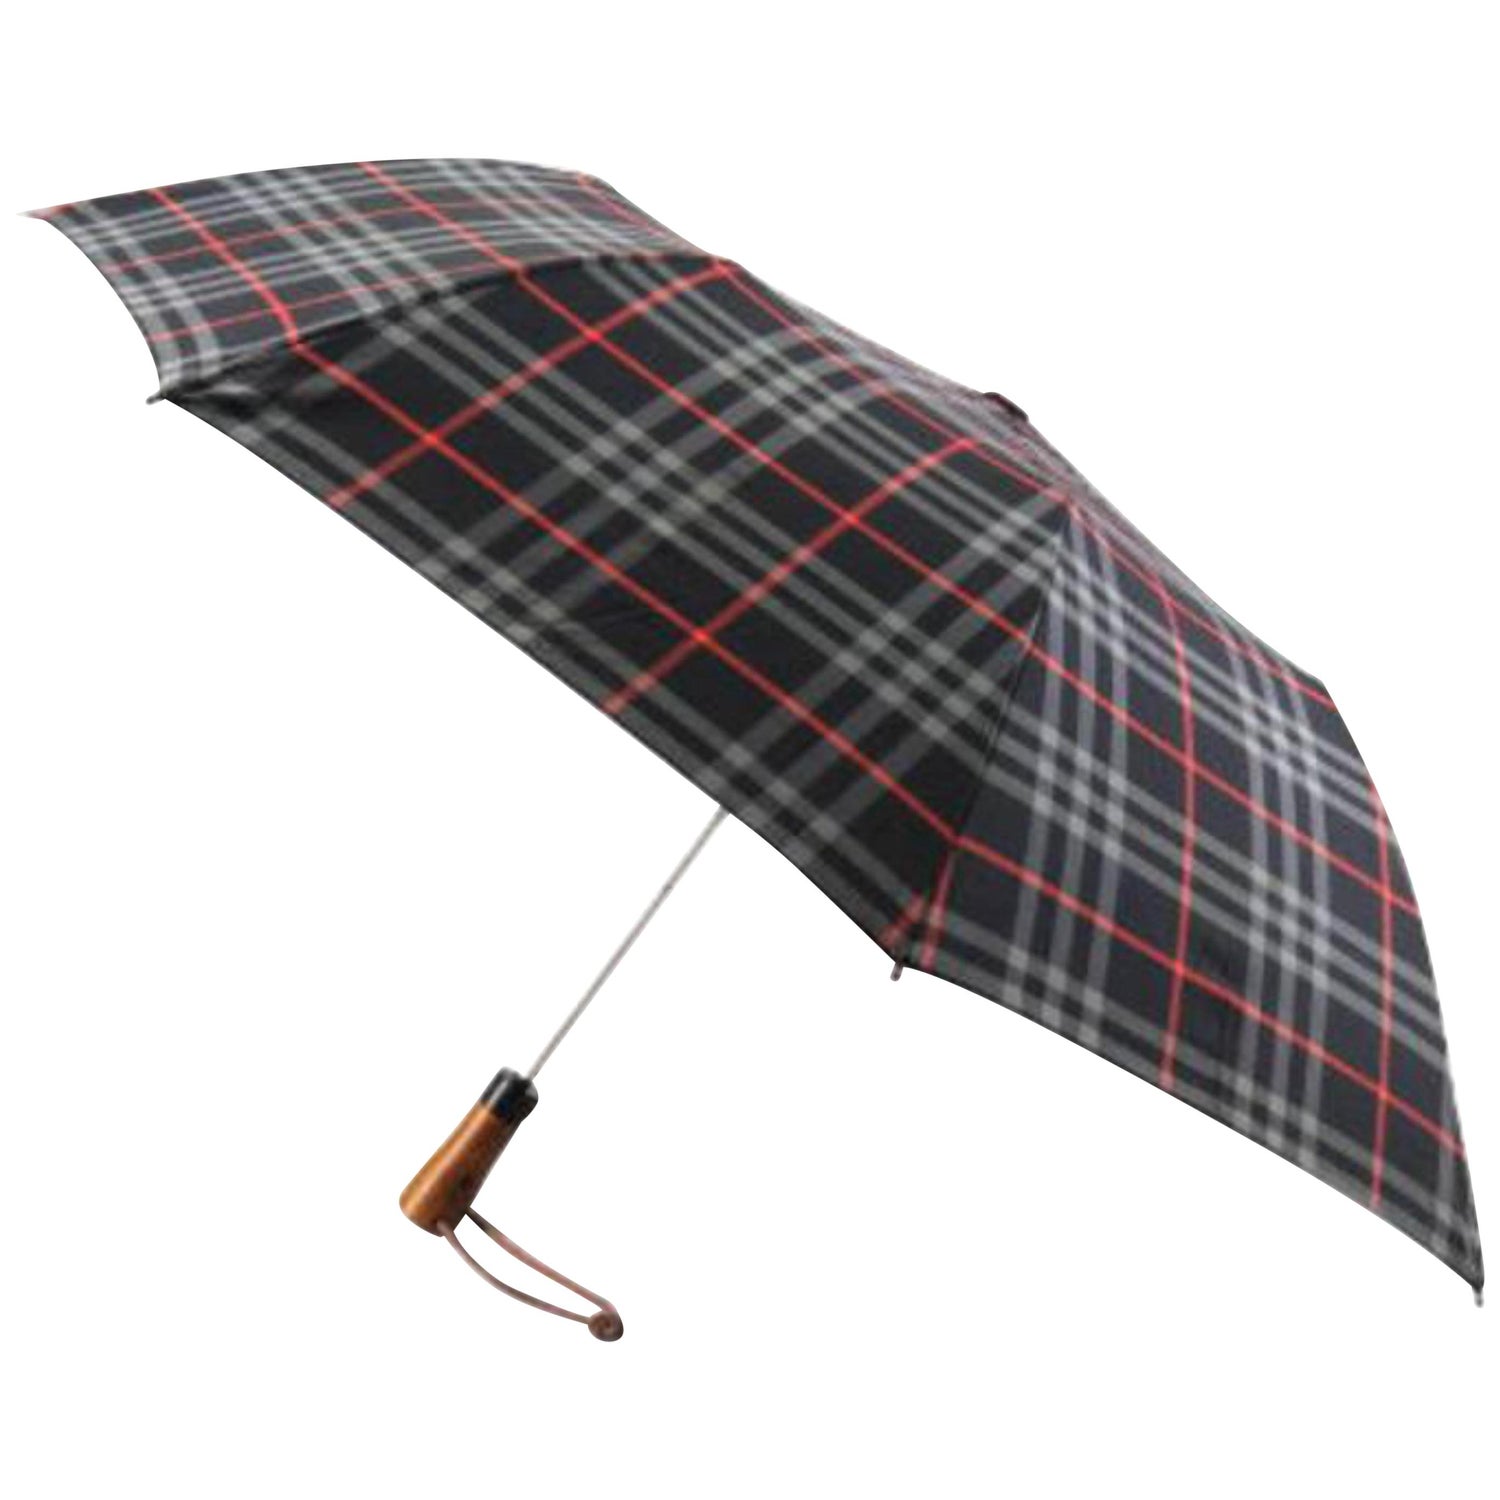 Burberry Umbrella - For Sale on 1stDibs